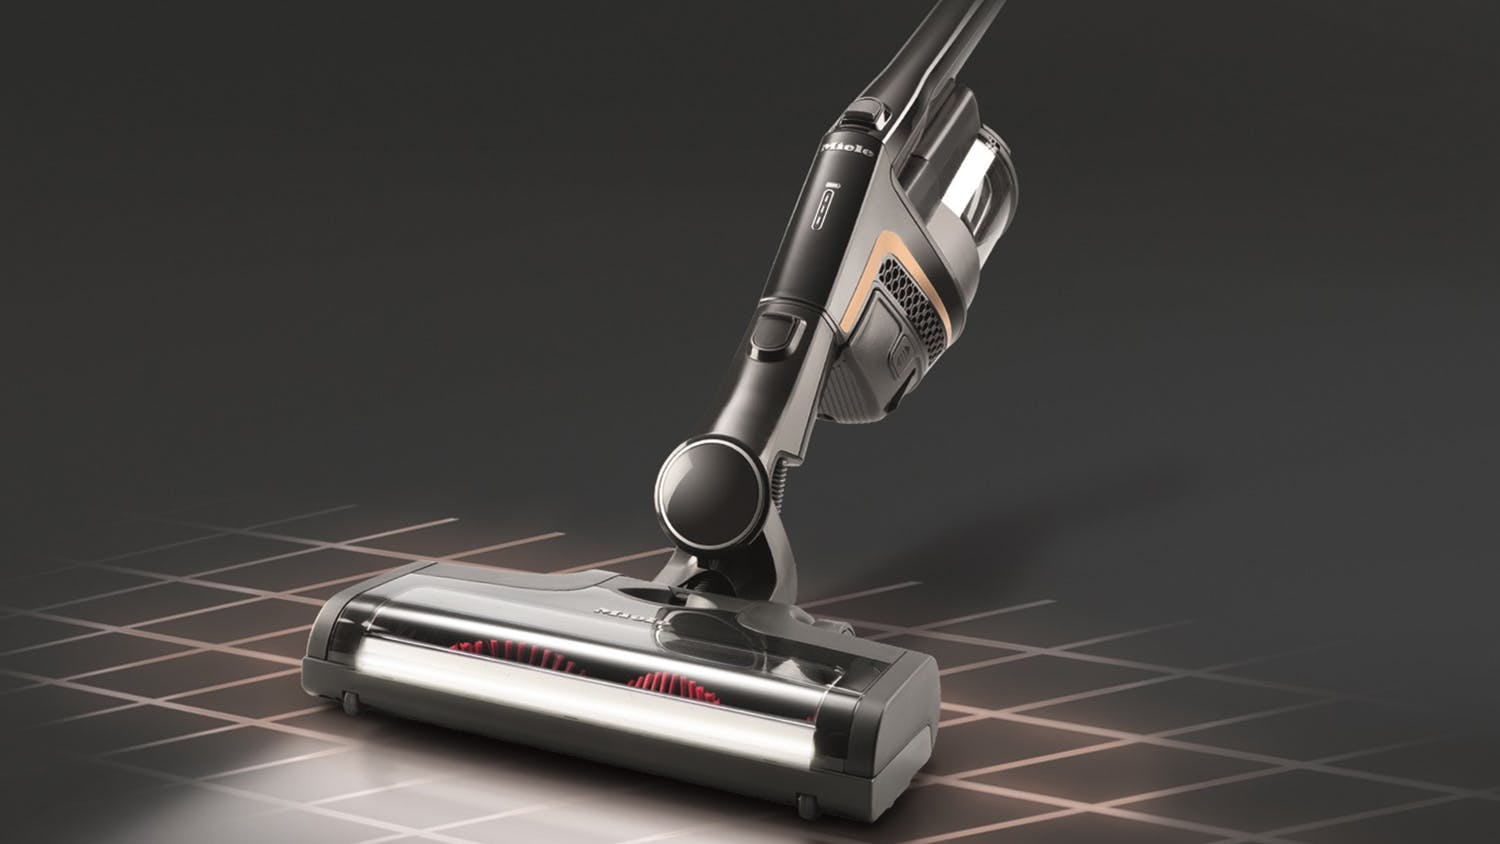 Miele Triflex HX1 Cat & Dog Handstick Vacuum Cleaner